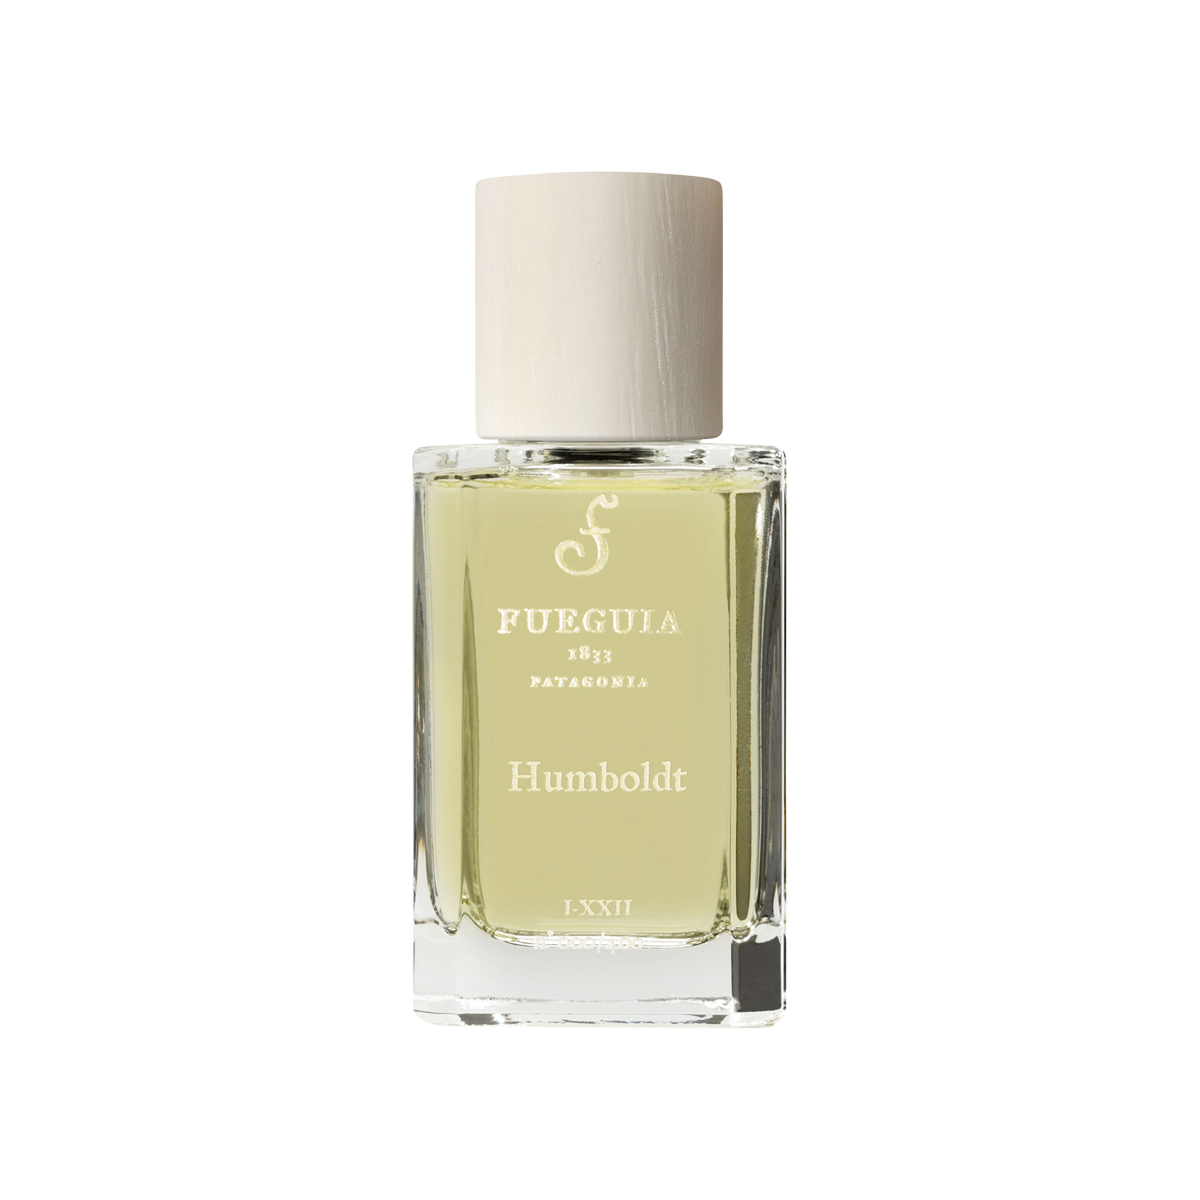 Fueguia - Humboldt Eau de Parfum